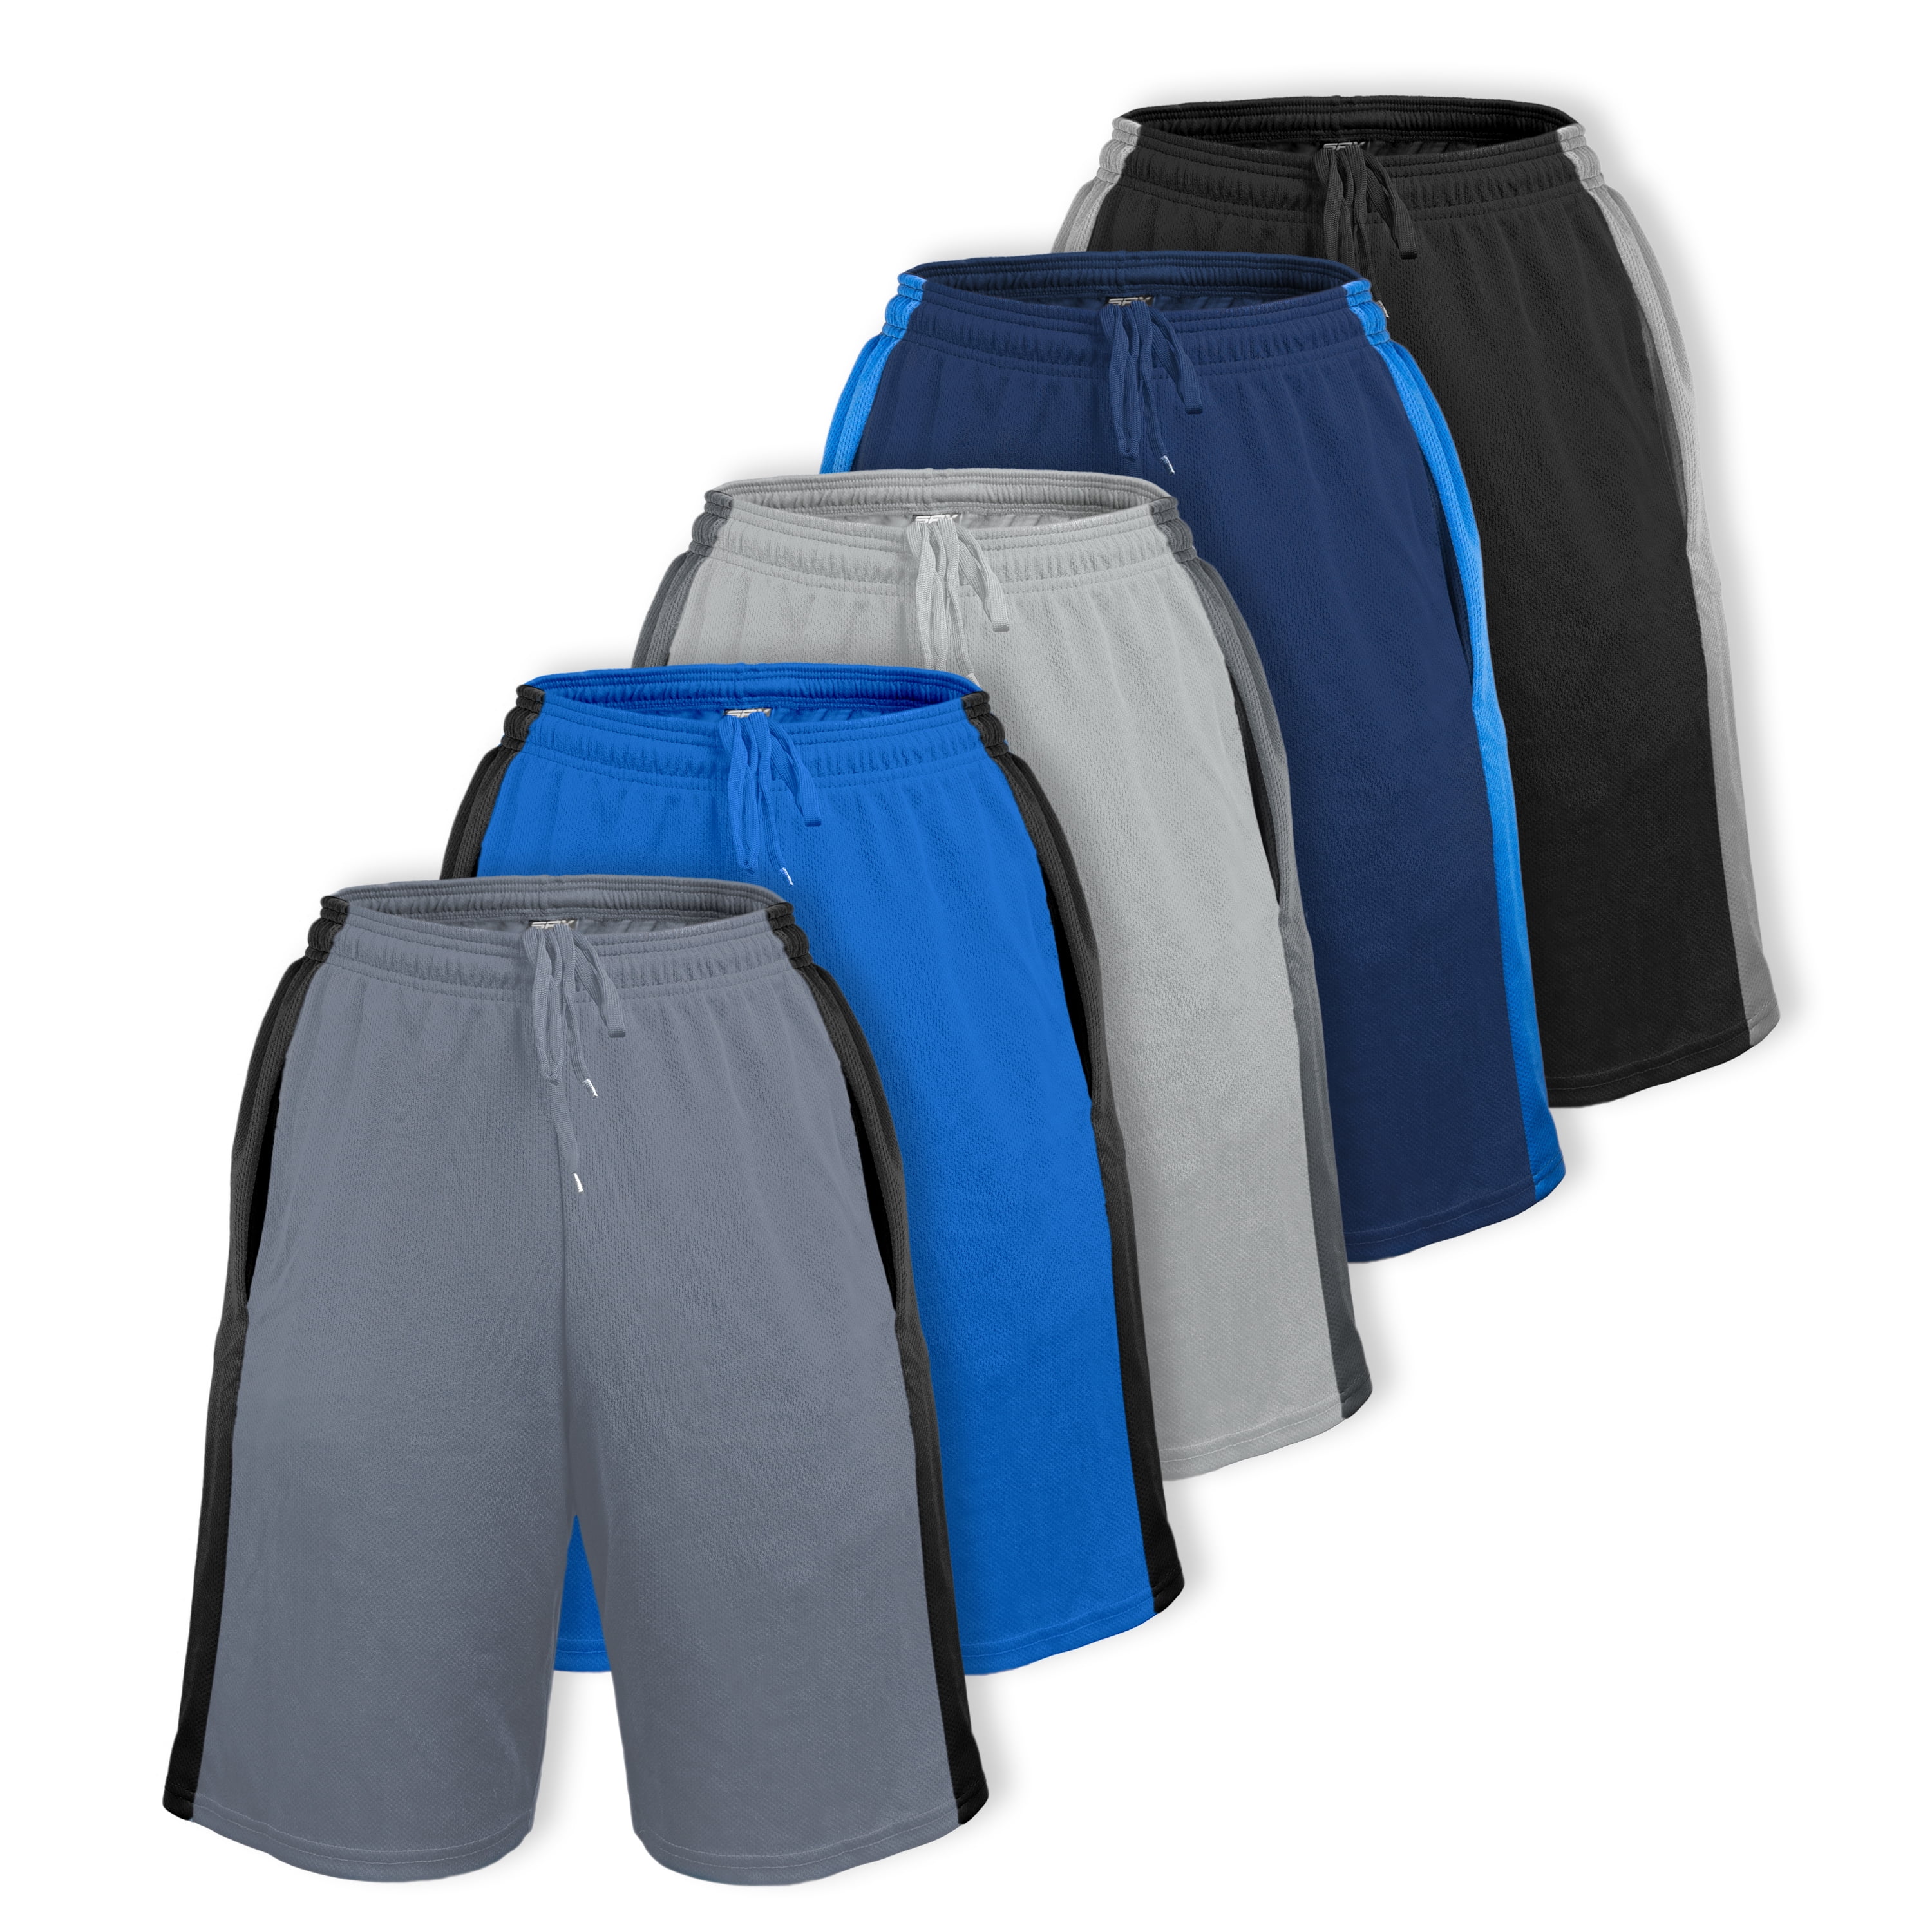 Sweat Shorts for Men Side Pockets Drawstring Waist Workout Athletic Shorts Cycling Training Sports Shorts 